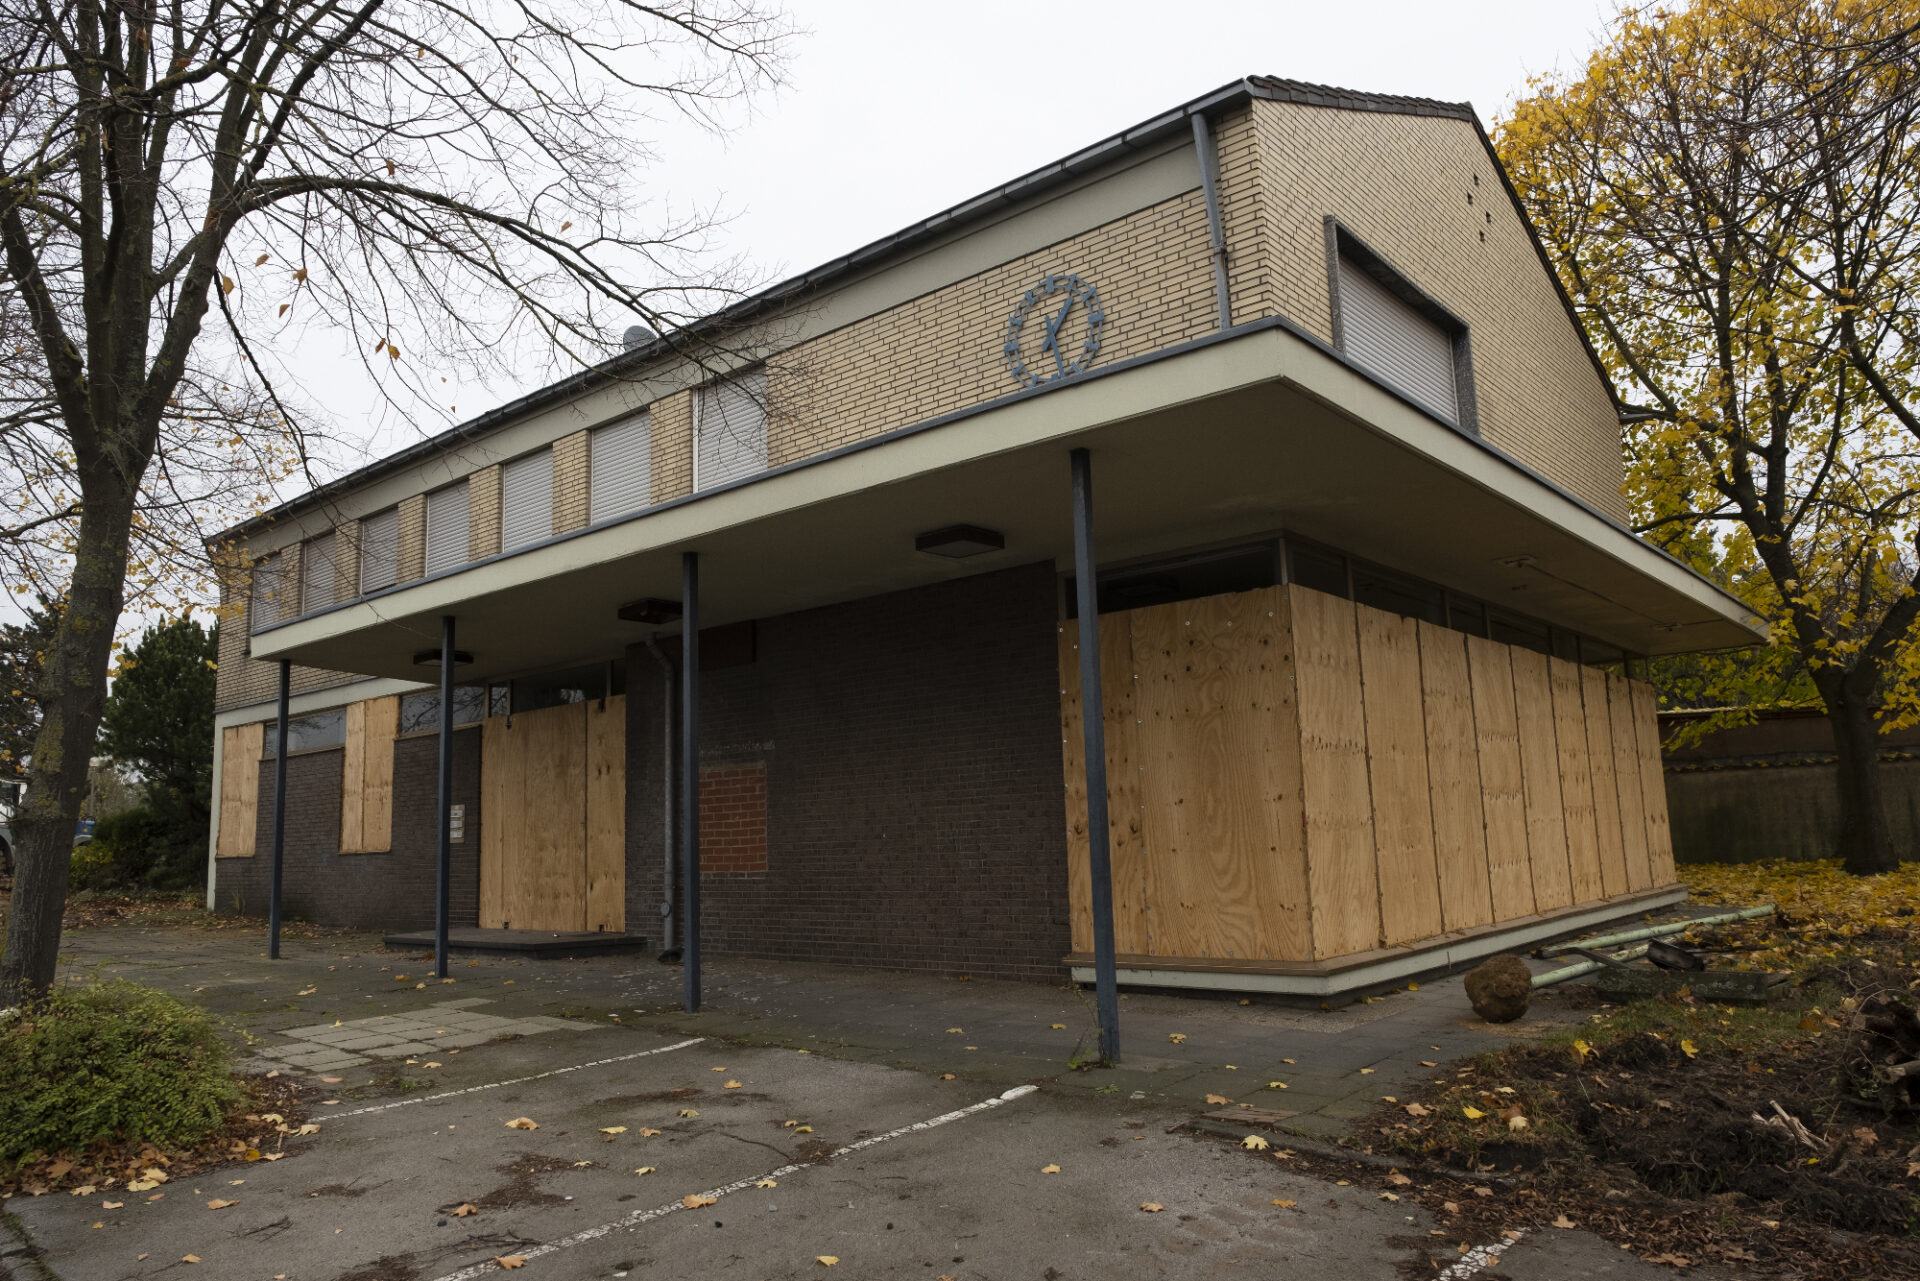 Condemned School, Old Manheim, North-Rhine Westphalia, 2019, Alan Gignoux